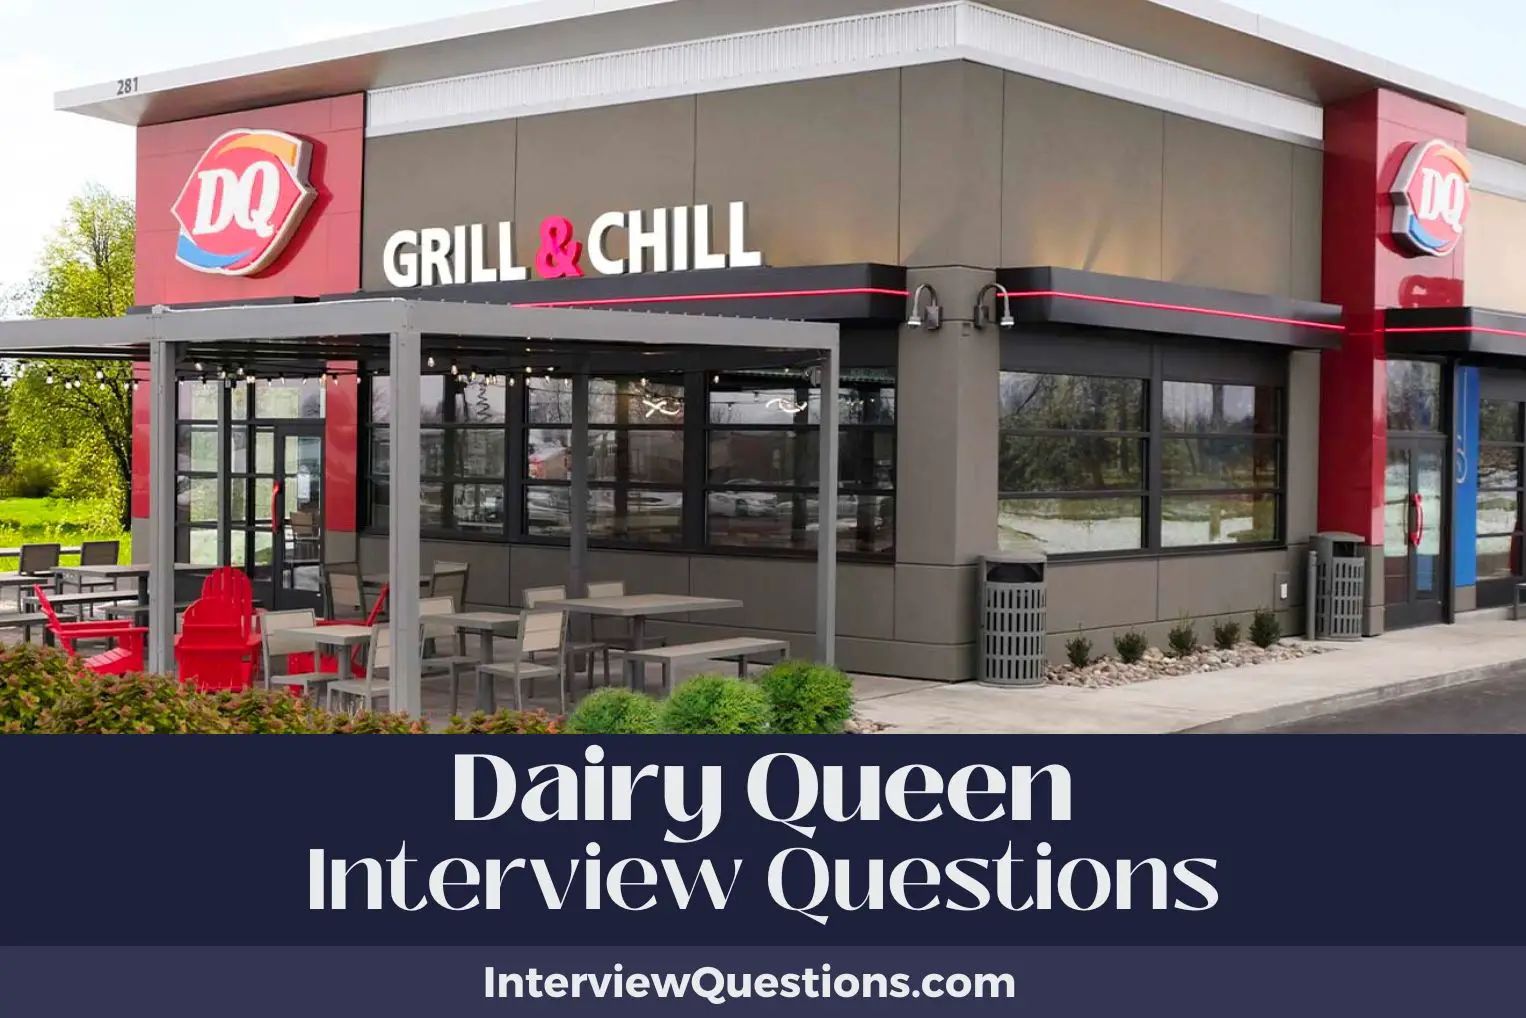 Dairy Queen Interview Questions